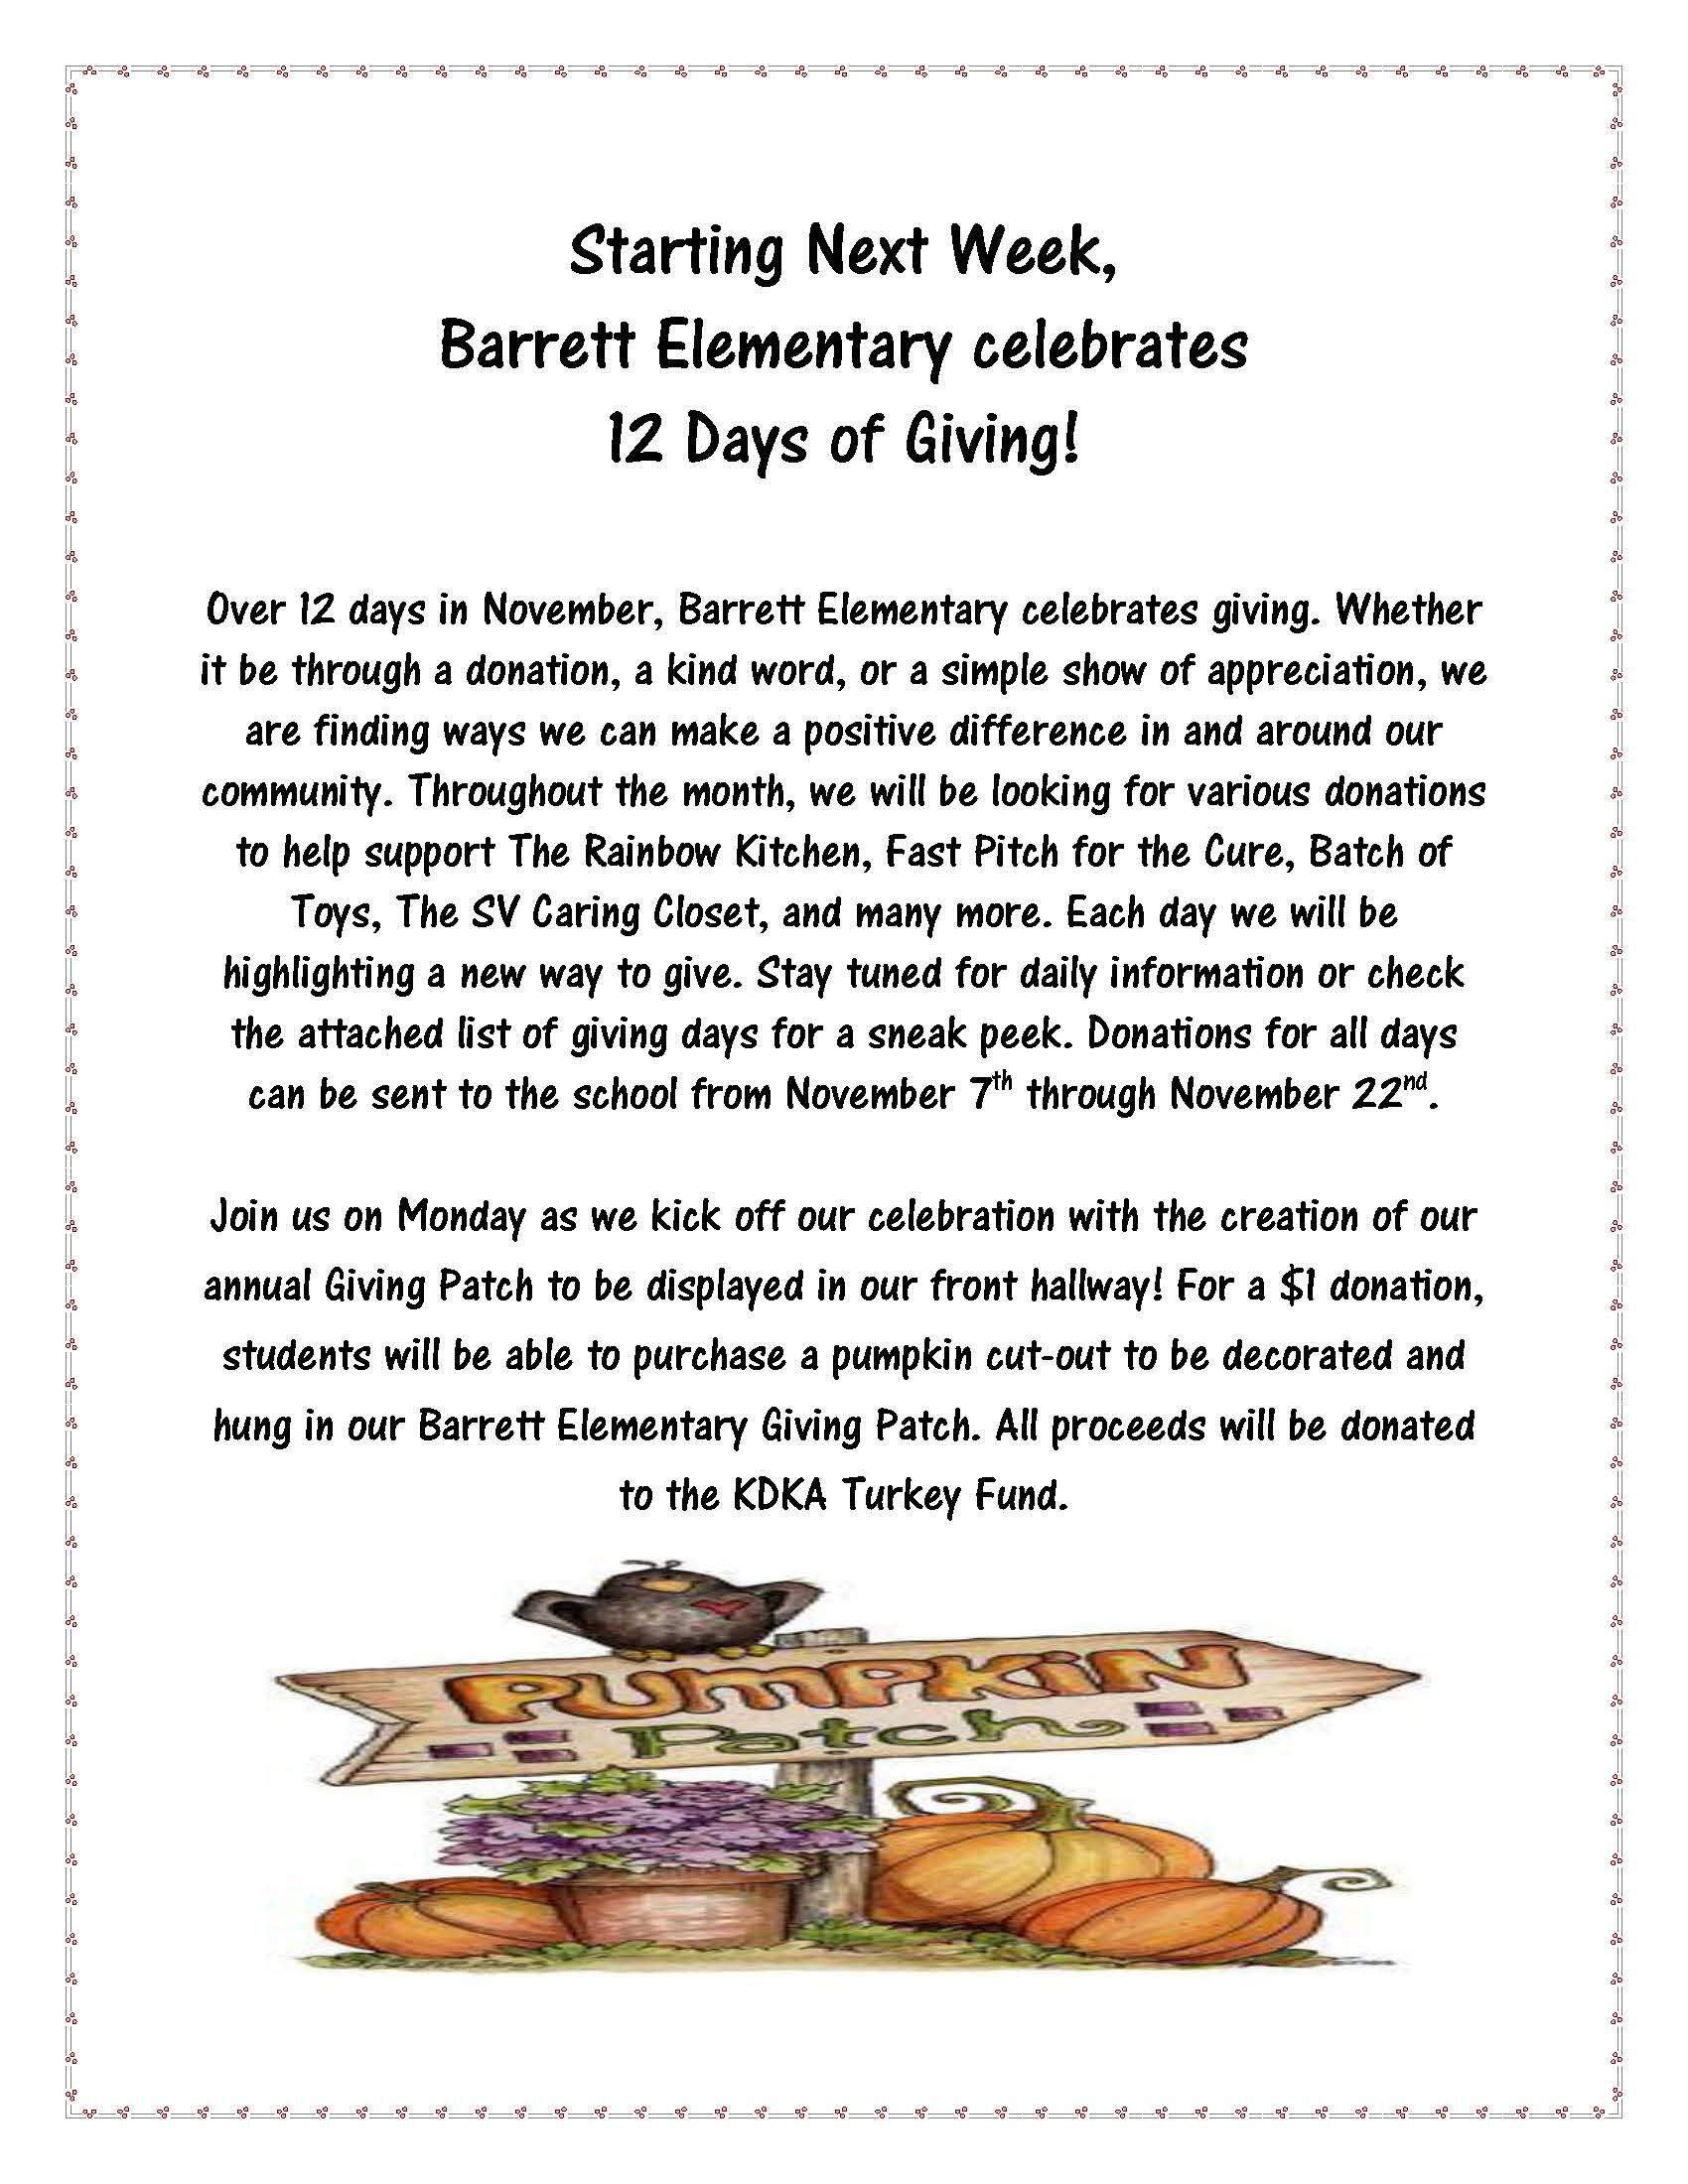 An image advertising the start of Barrett Elementary's 12 Days of Giving, running from Nov. 7 to Nov. 12